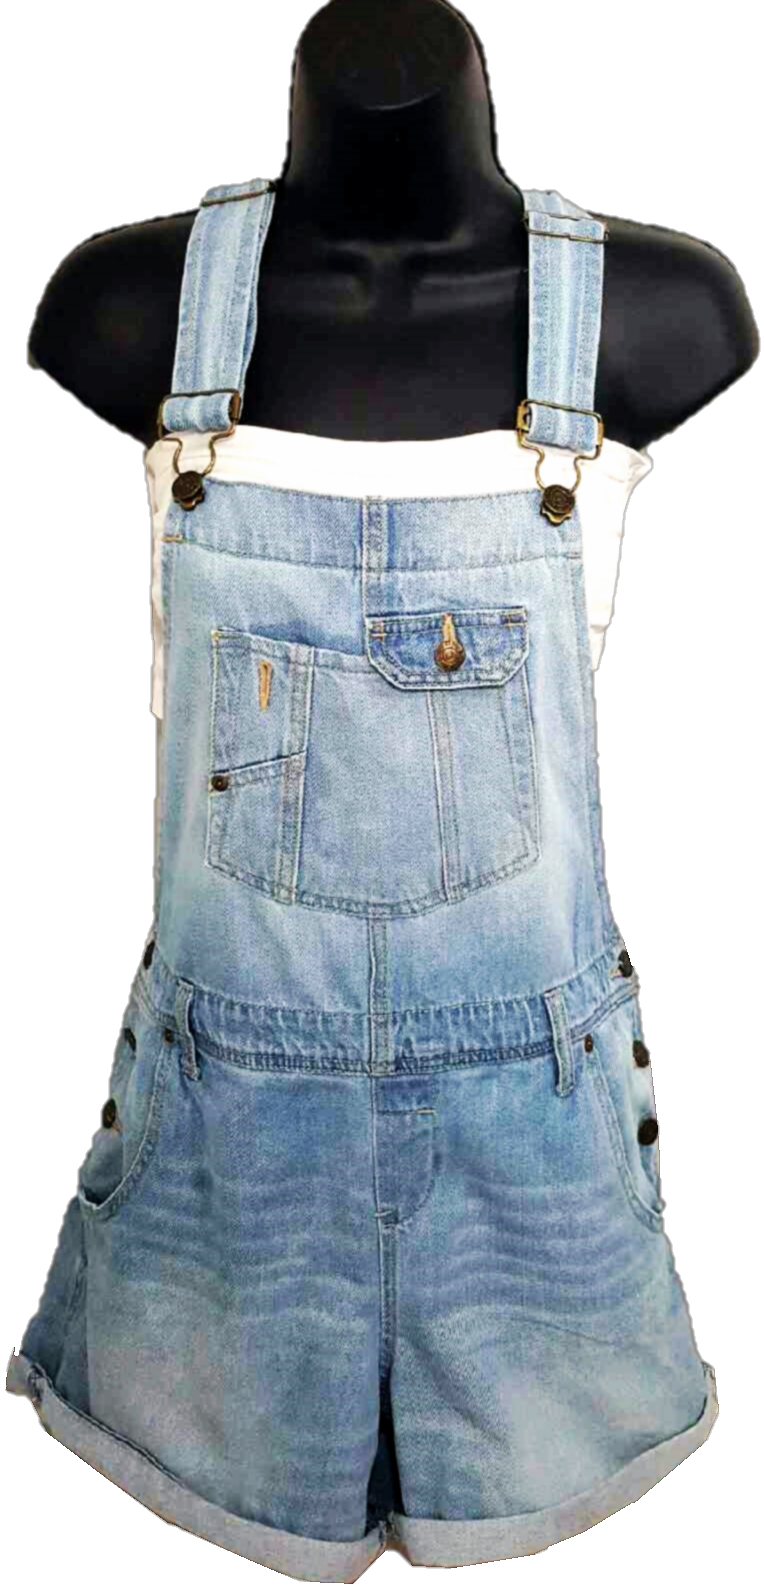 Cuffed Denim overalls (shorts)